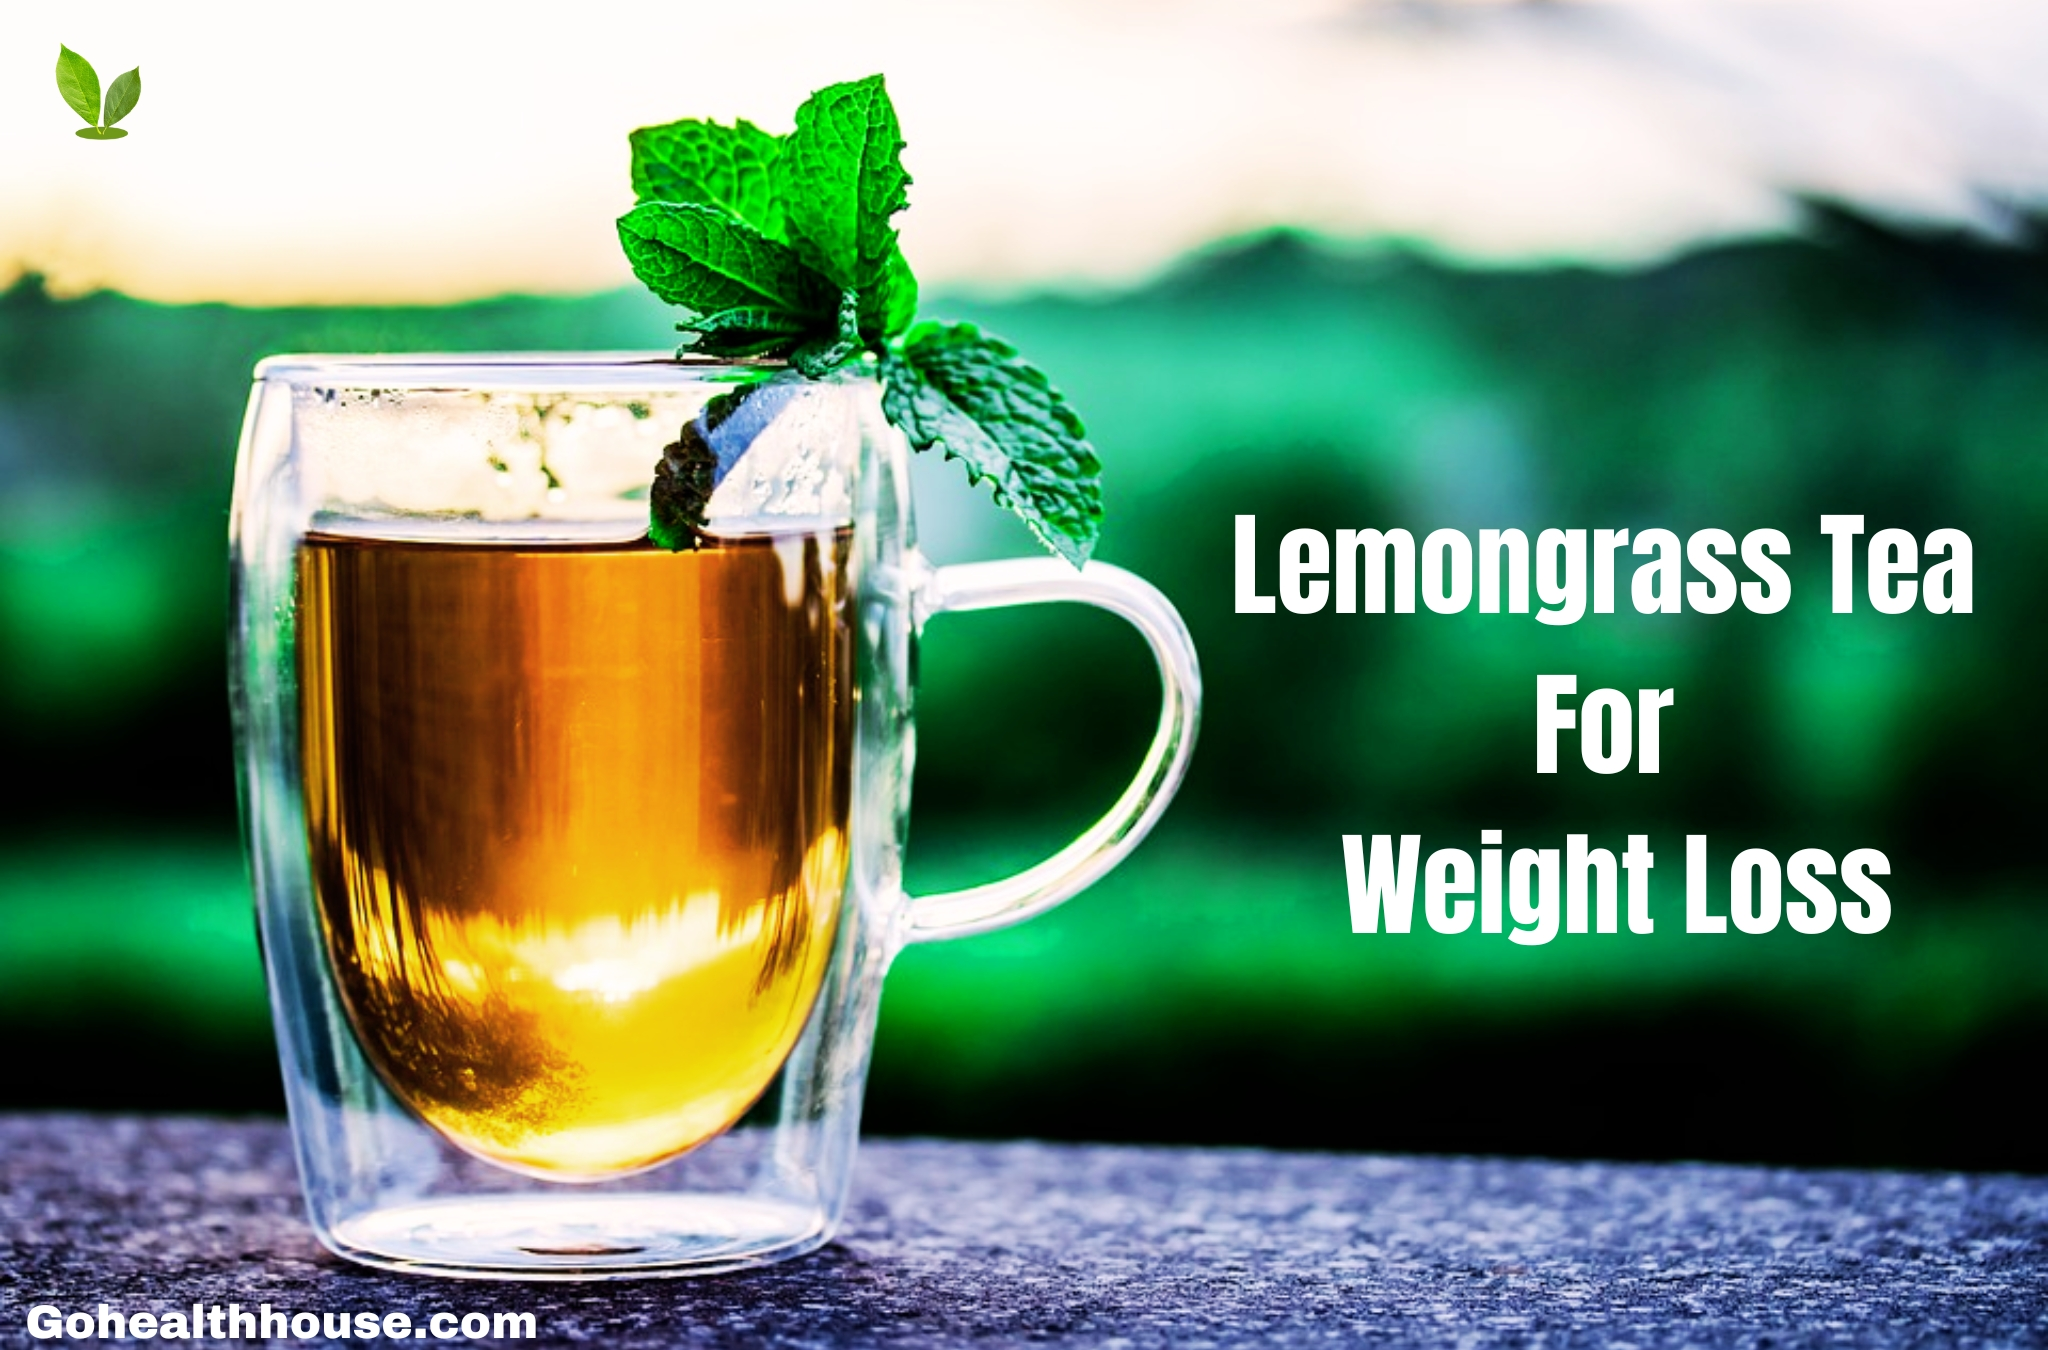 How To Make lemongrass Tea For Weight Loss